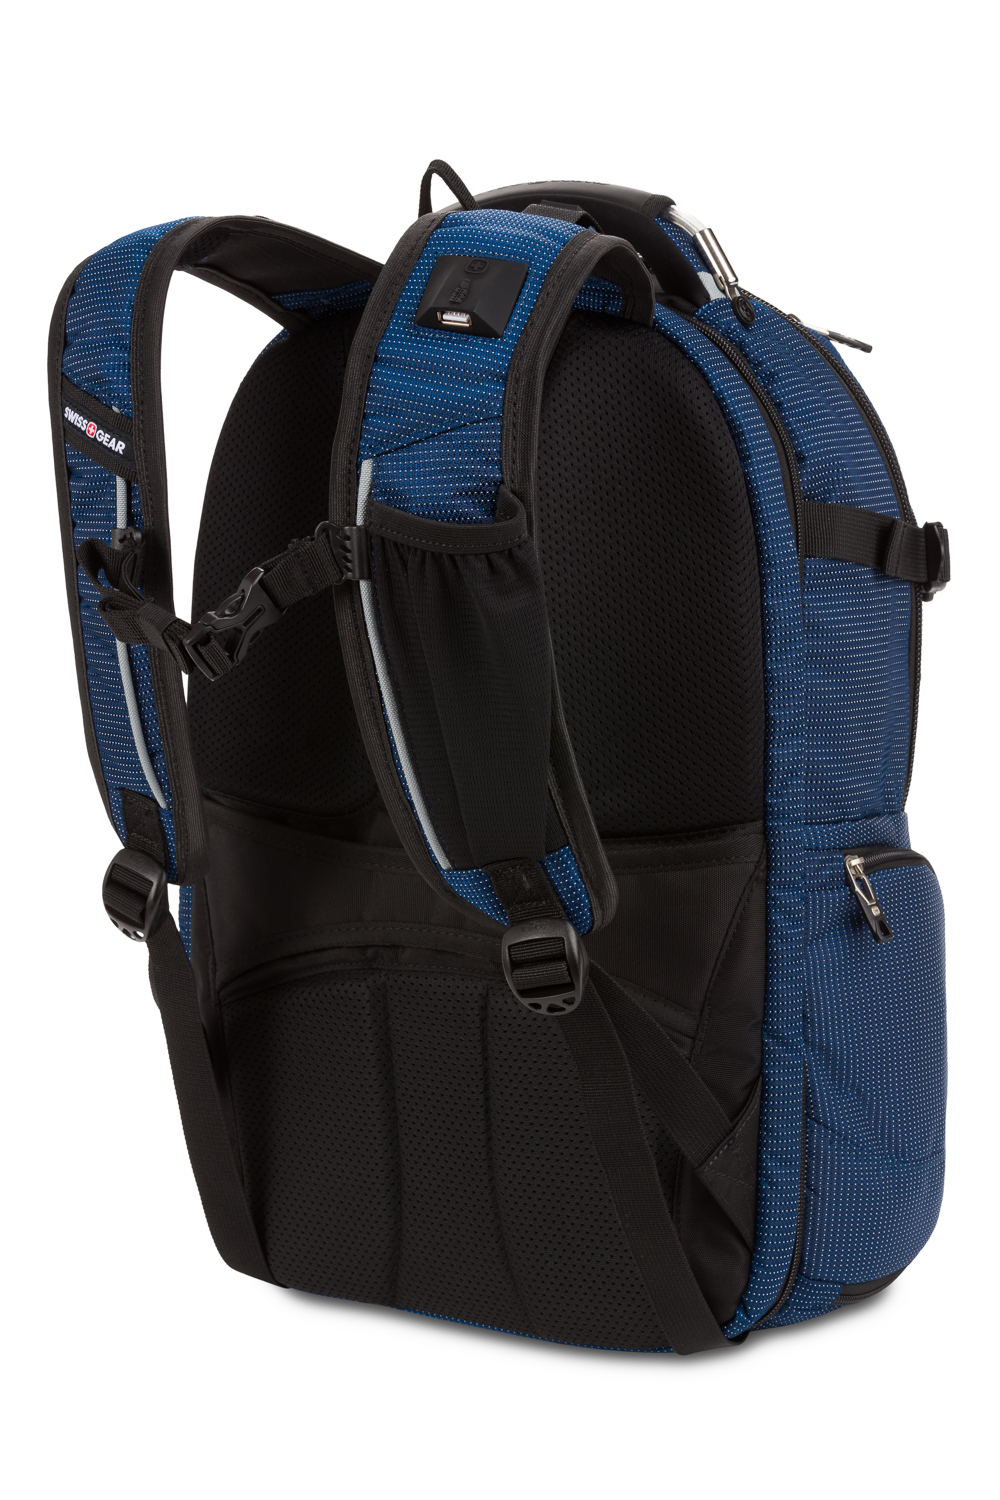 Swissgear 5358 USB ScanSmart Laptop Backpack - Blue/Black